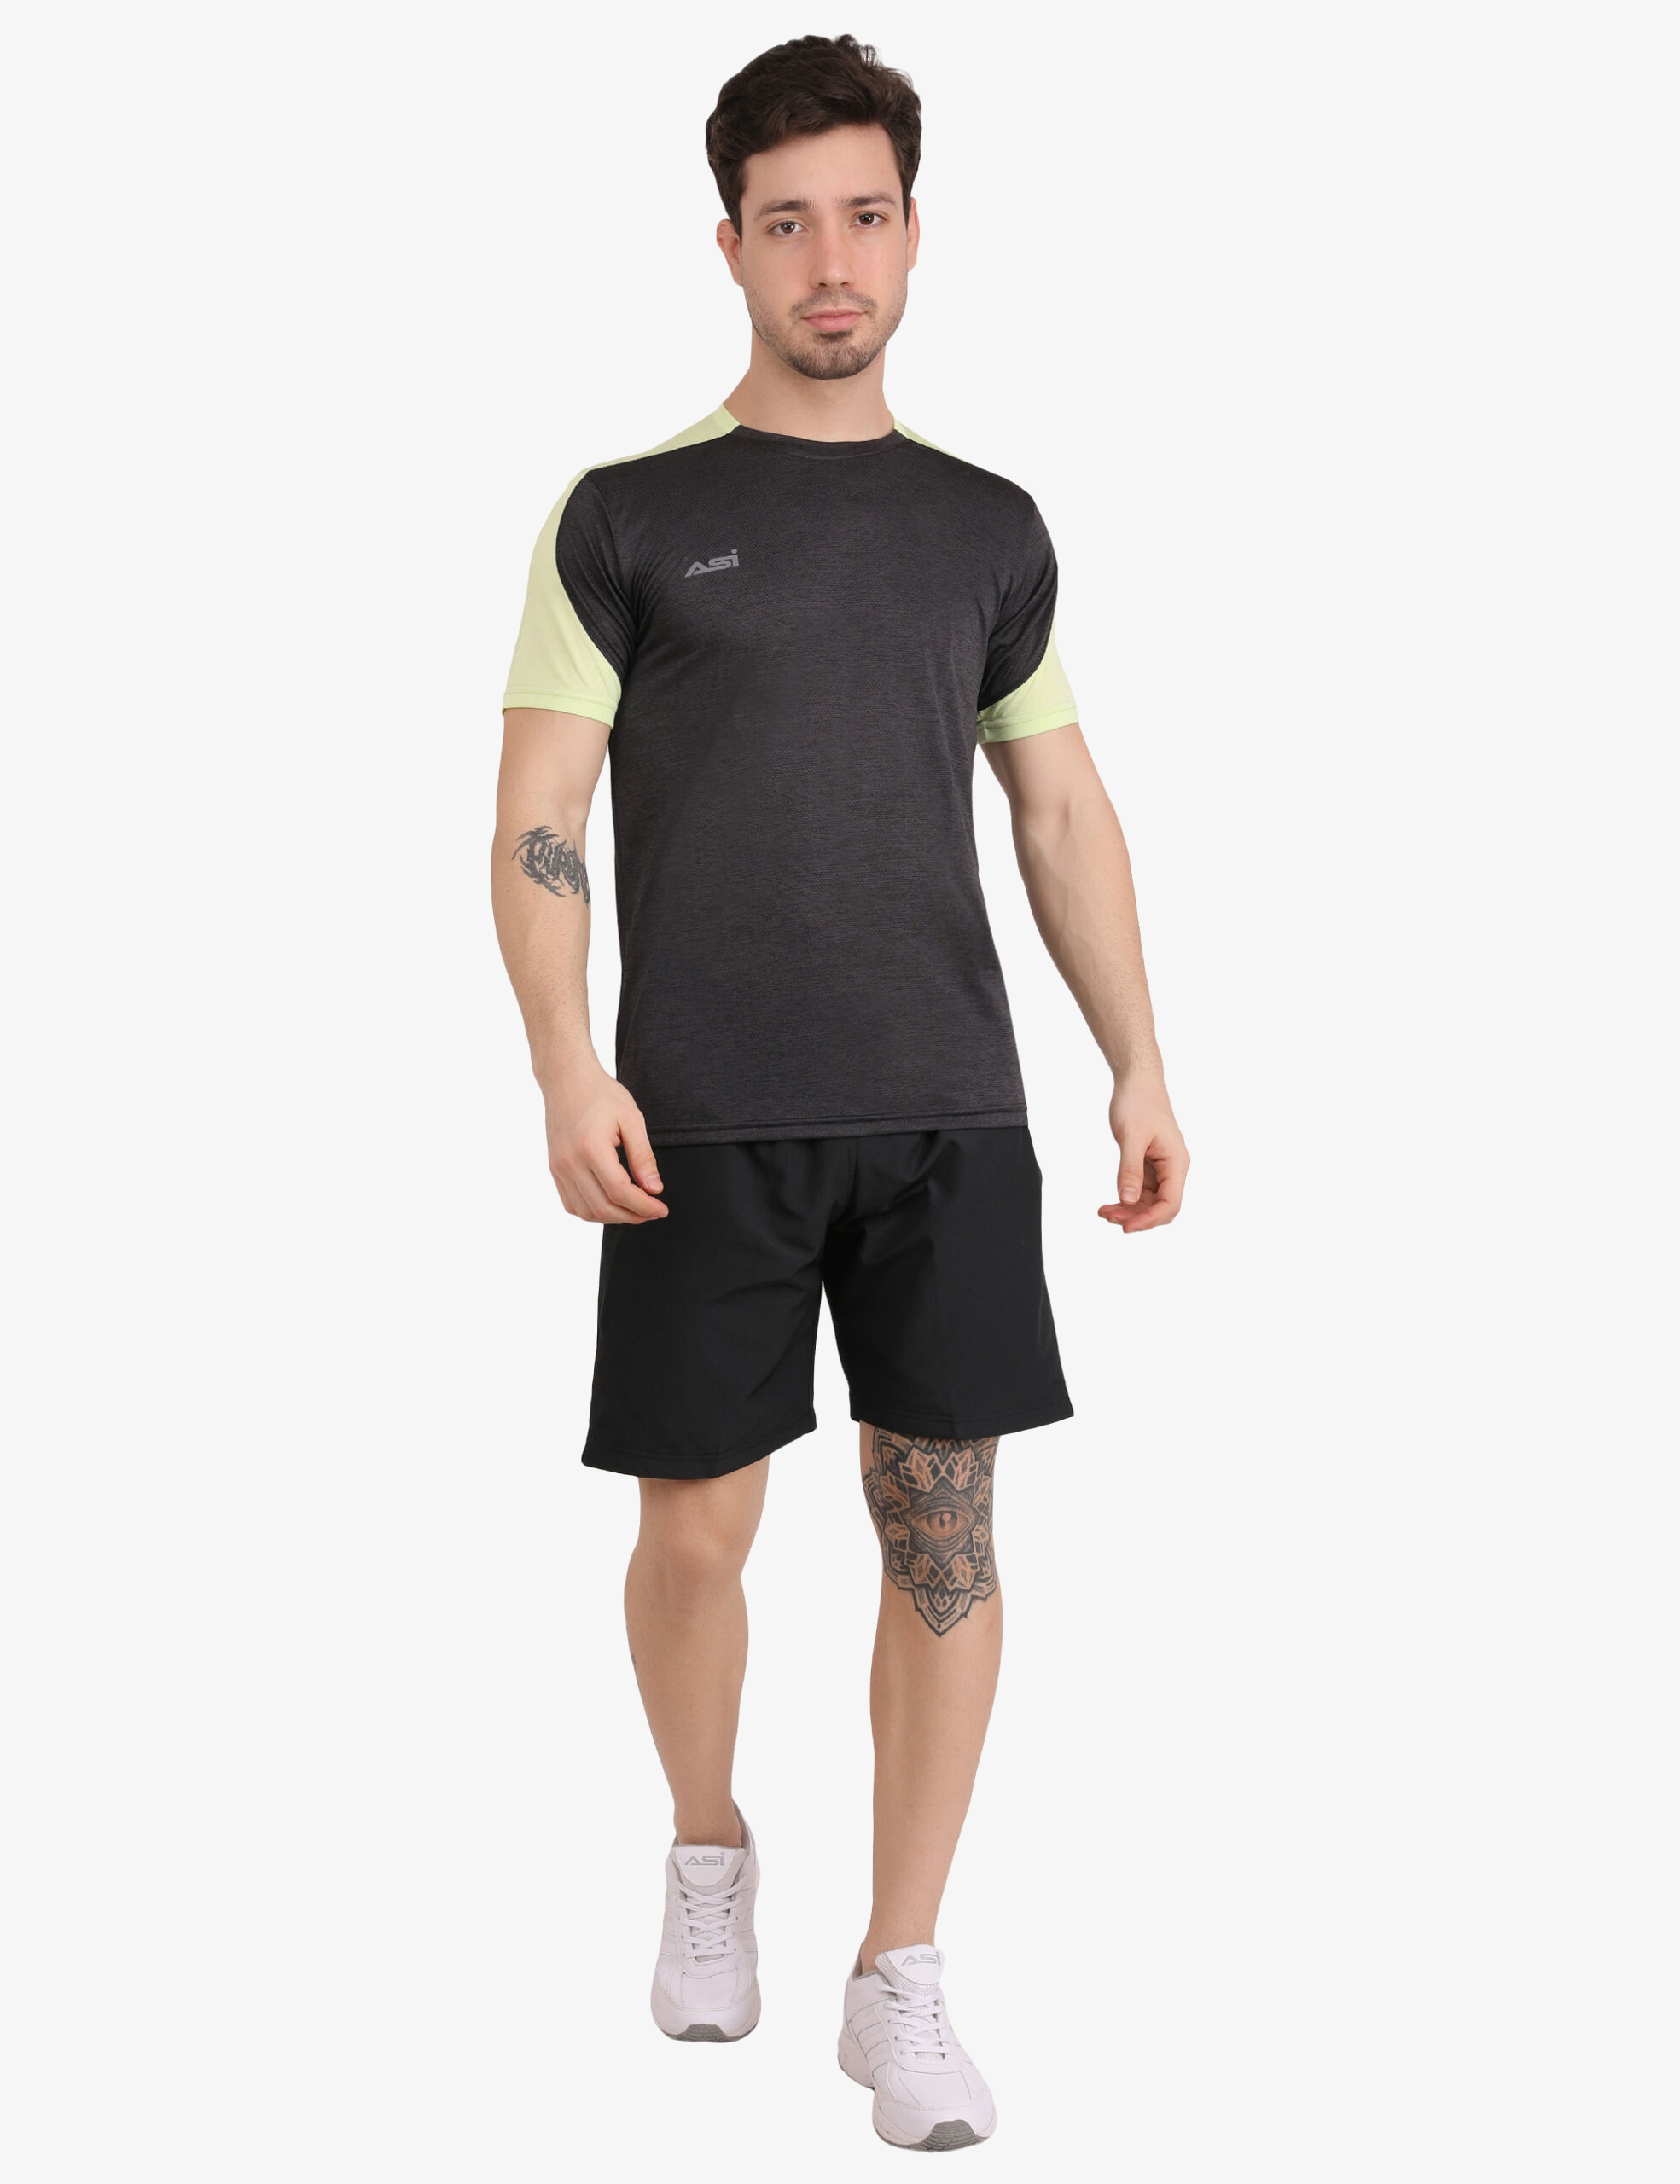 ASI Swift Sports T-Shirt for Men Black Color